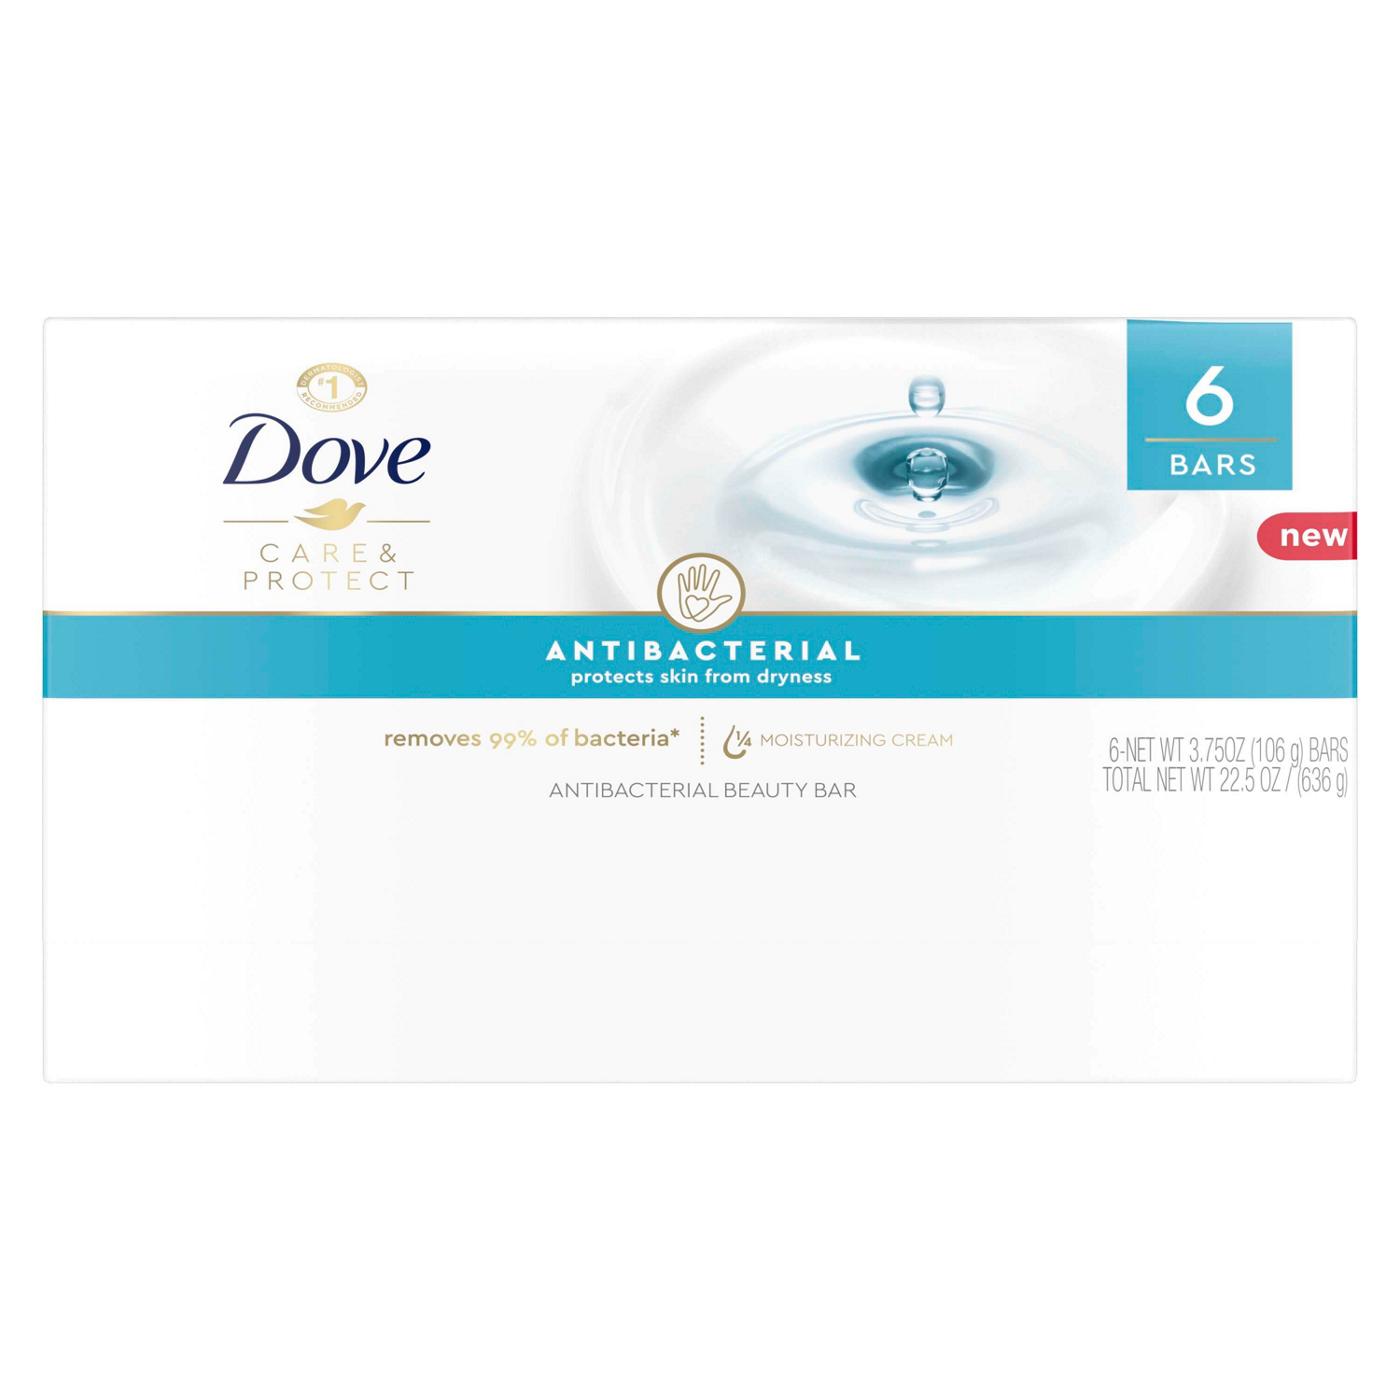 Dove Beauty Bar Antibacterial; image 2 of 3